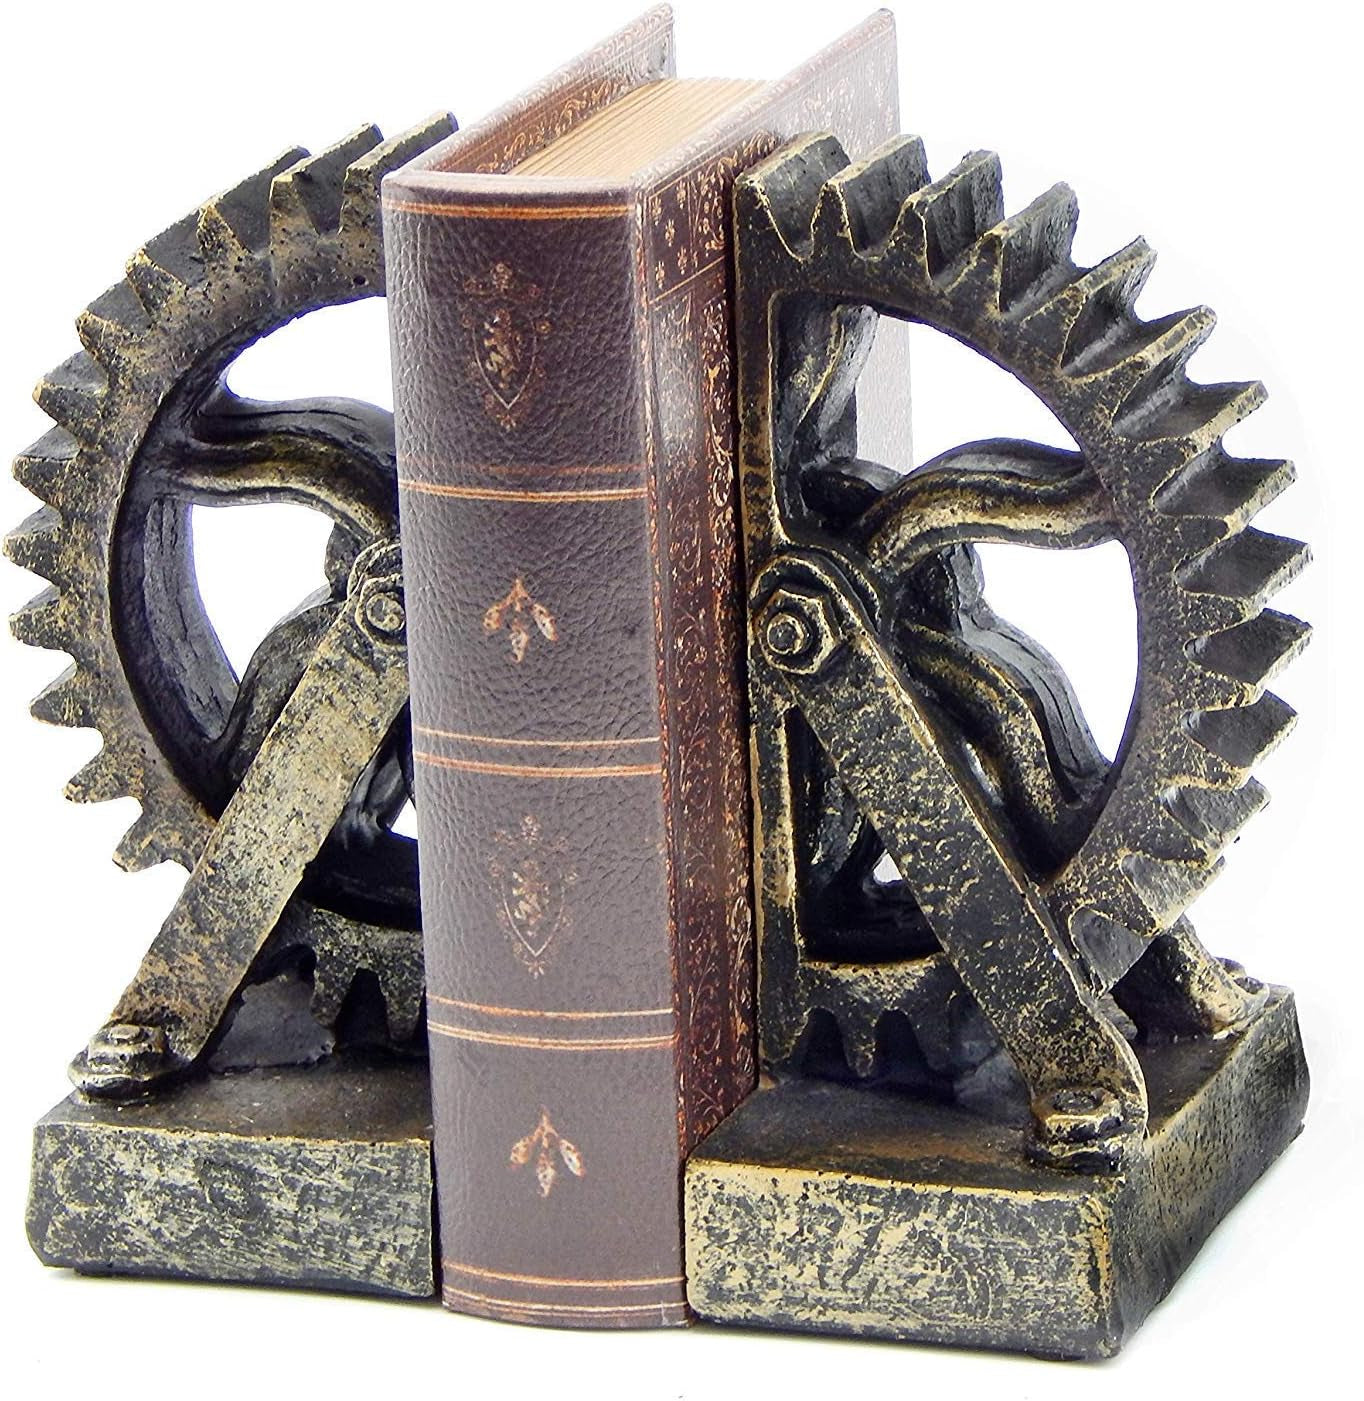 25662 Decorative Bookend Gear Book Ends Industrial Rustic Vintage Unique Heavy Statues Bookshelves Stopper Support Home Decor Accents